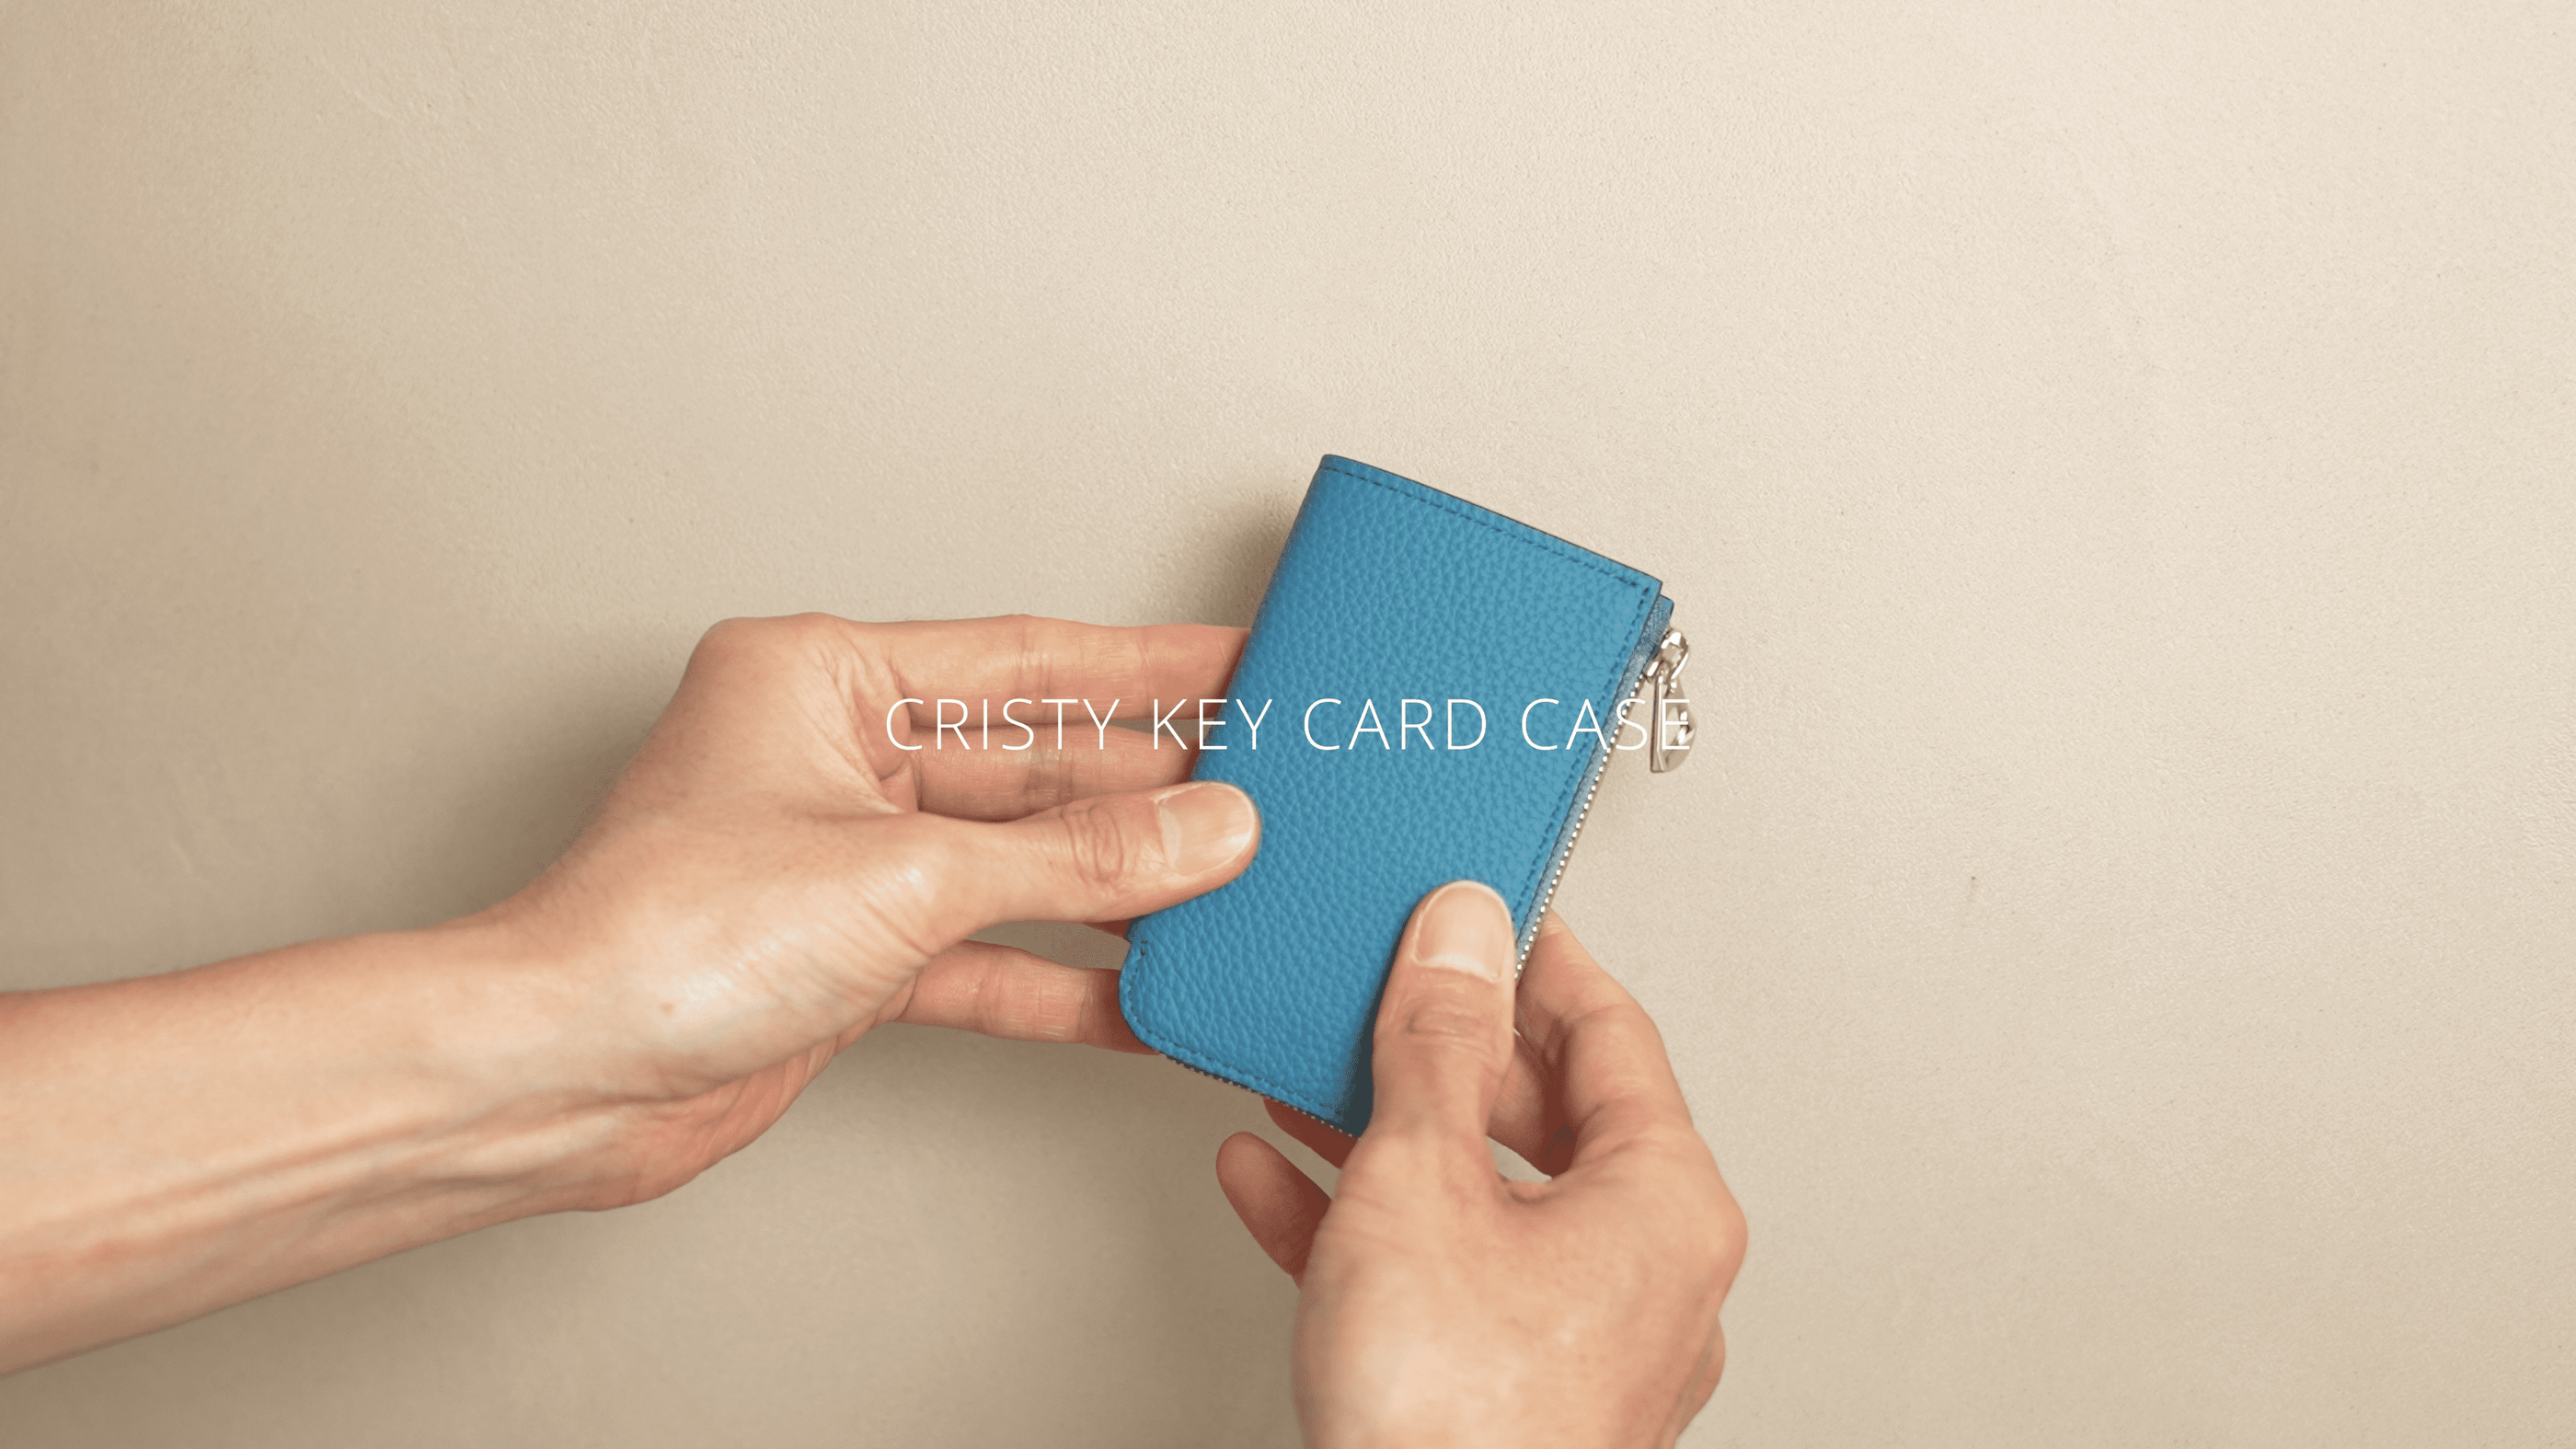 CRISTY KEY CARD CASE (クリスティキーカードケース) - ITTI (イッチ) | レザーブランド スマートキー 本革 メンズ レディース 革小物